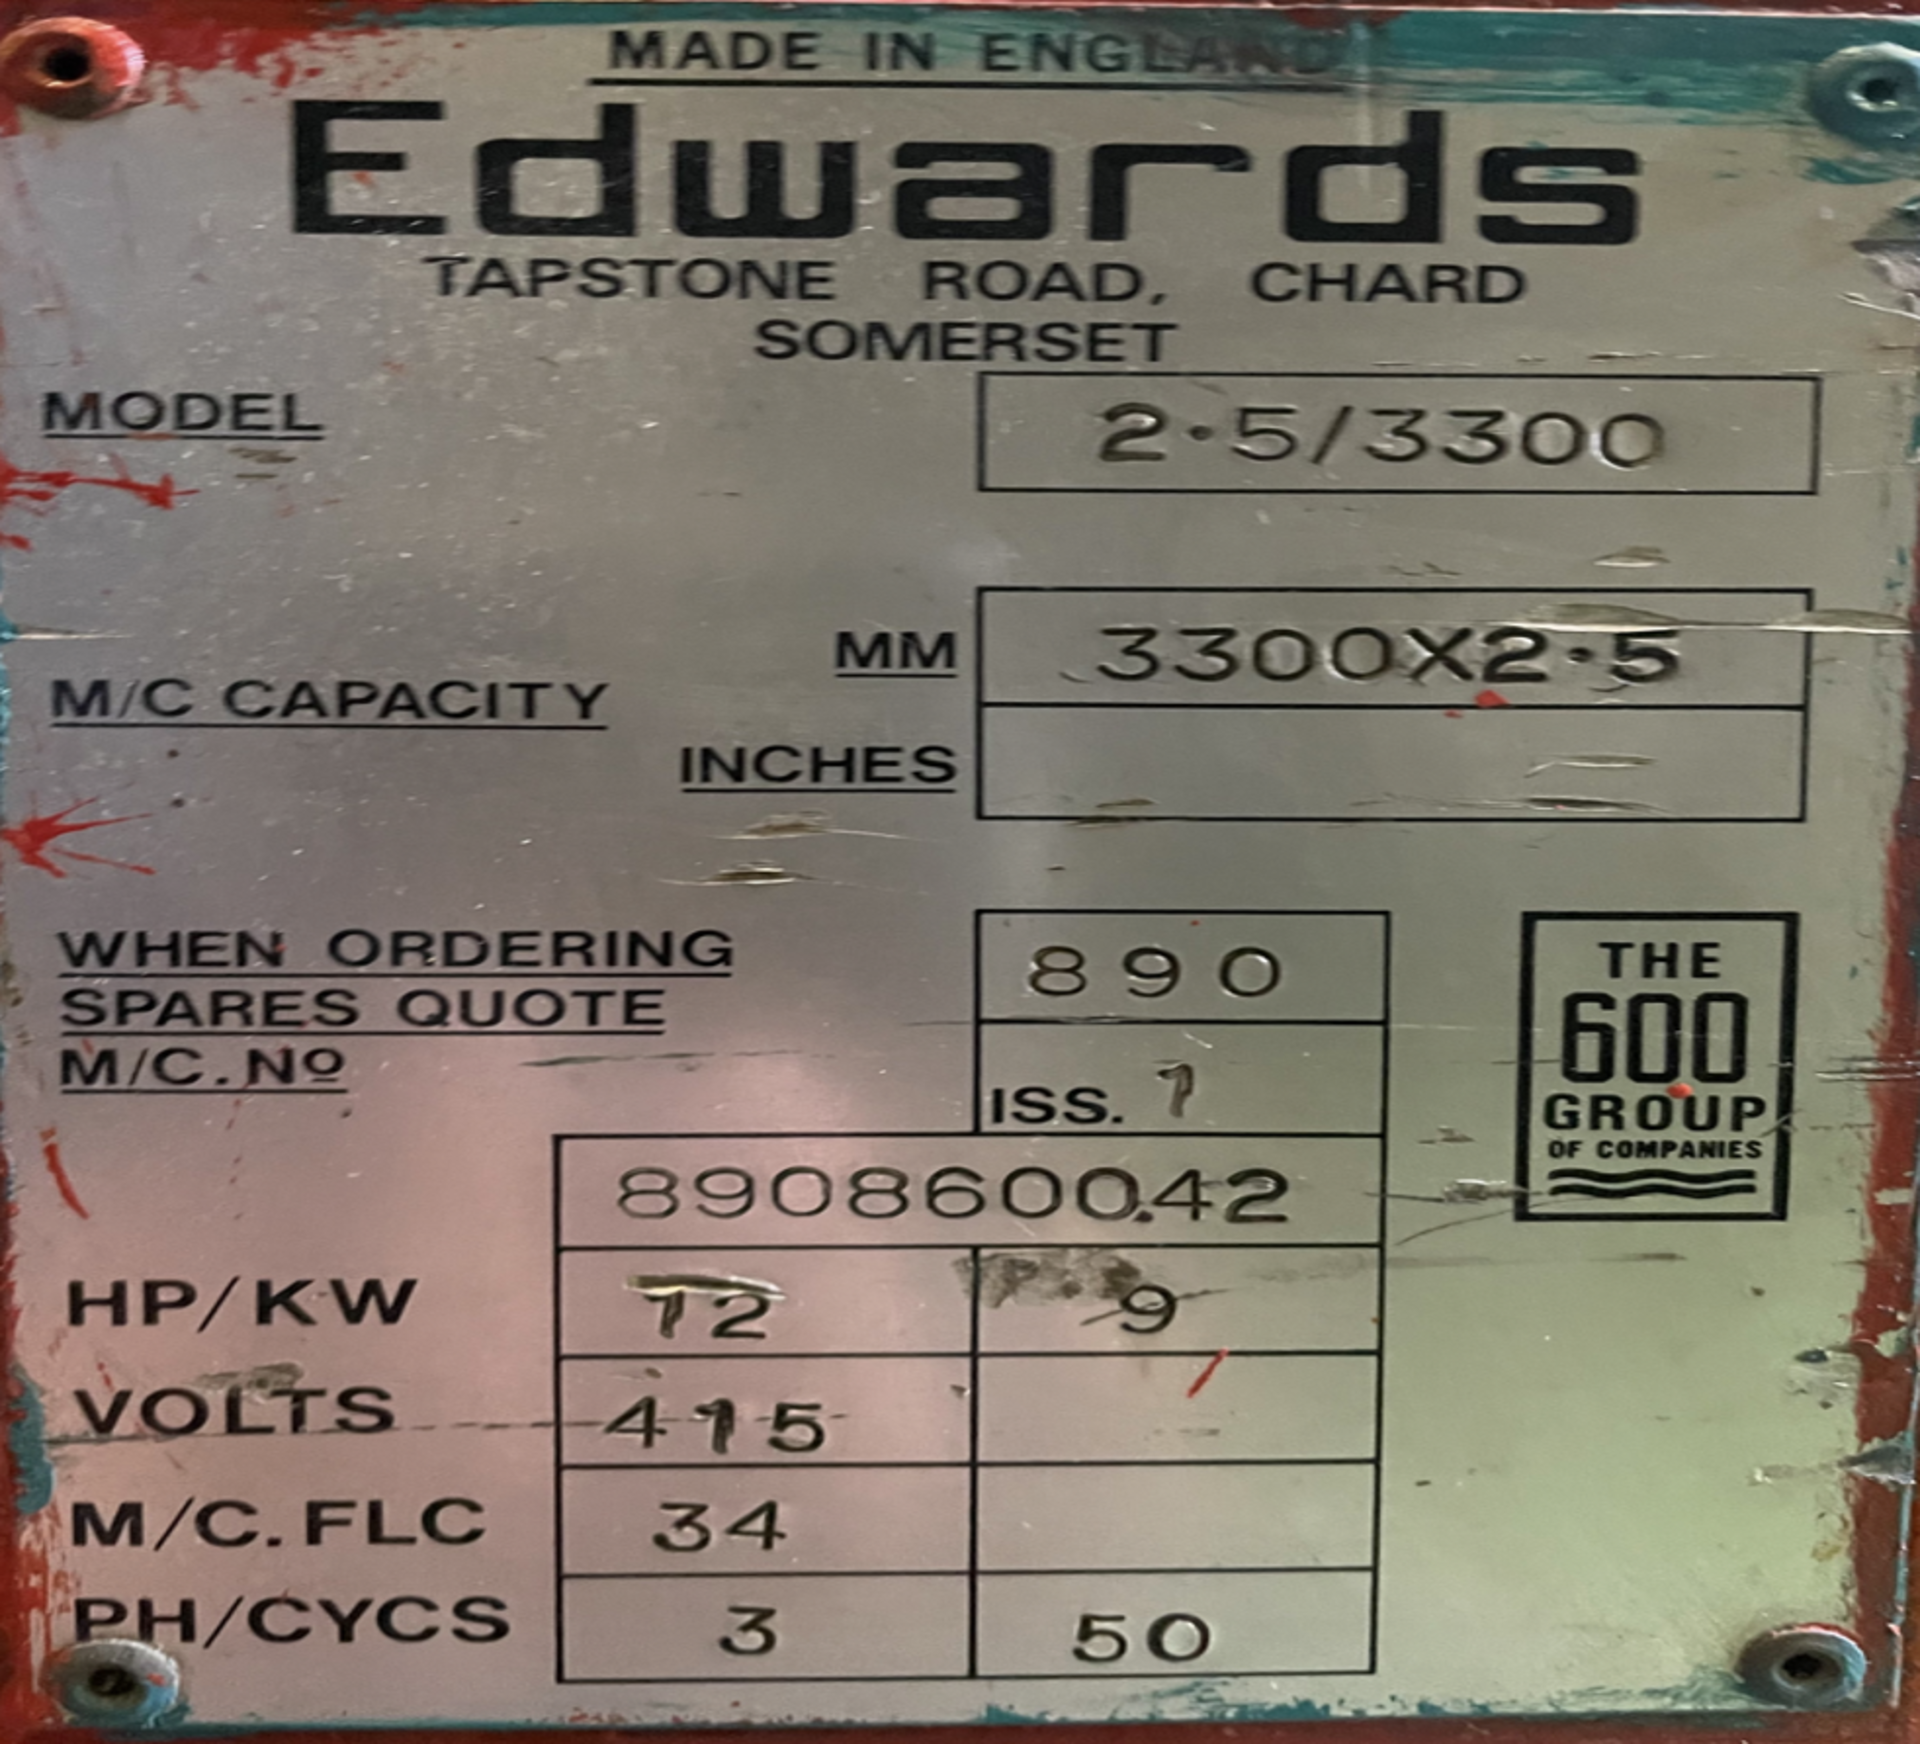 Edwards guillotine - Model number: 2.5/3300 - Image 3 of 3